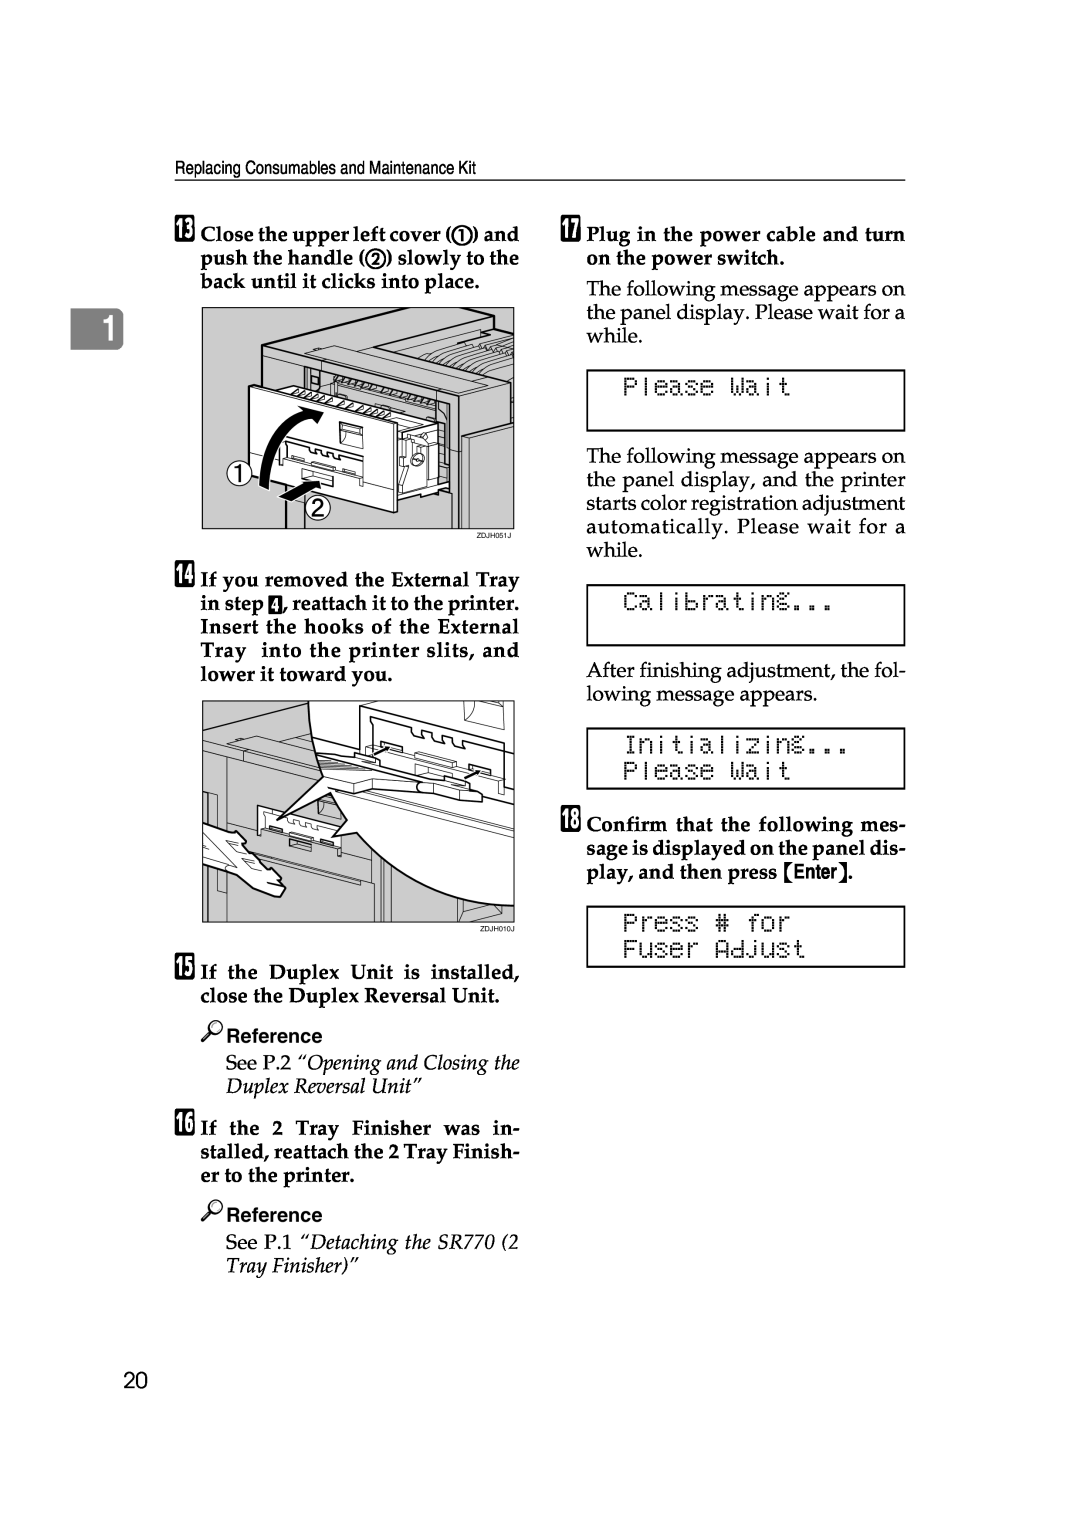 Savin SLP38C manual Initializing Please Wait, Press # for Fuser Adjust, Calibrating, Reference 